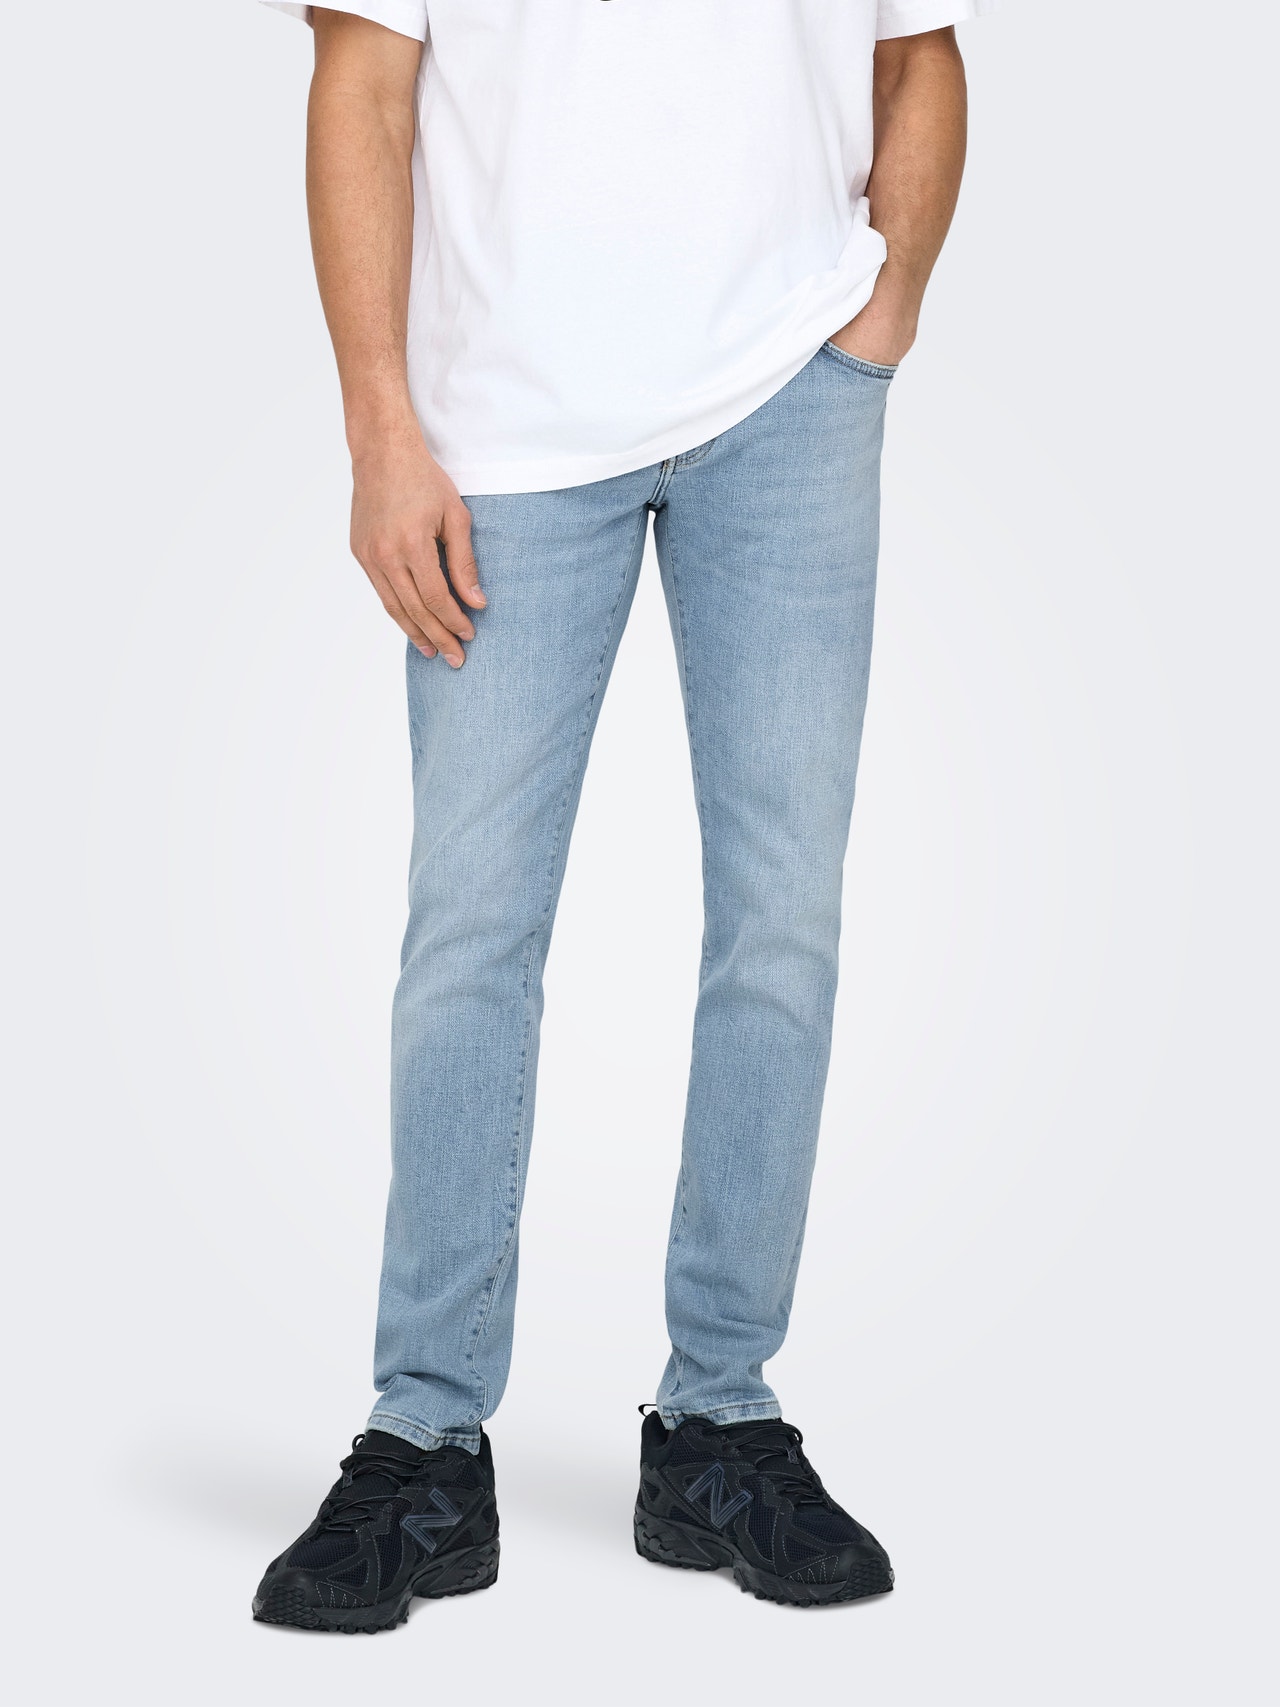 ONLY & SONS Slim Fit Low rise Jeans -Light Blue Denim - 22029240